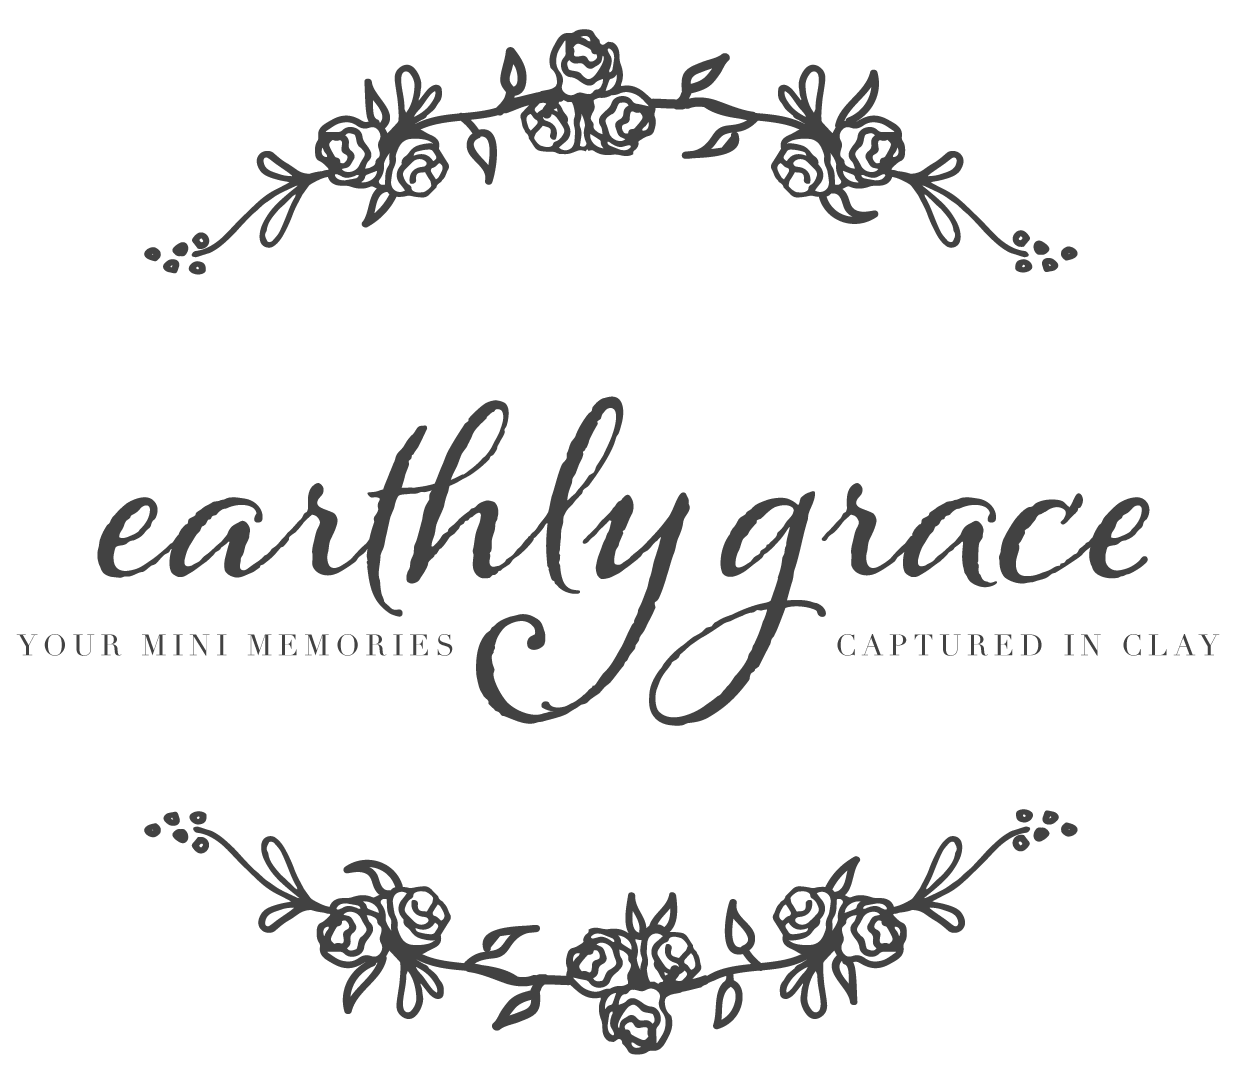 Earthly Grace